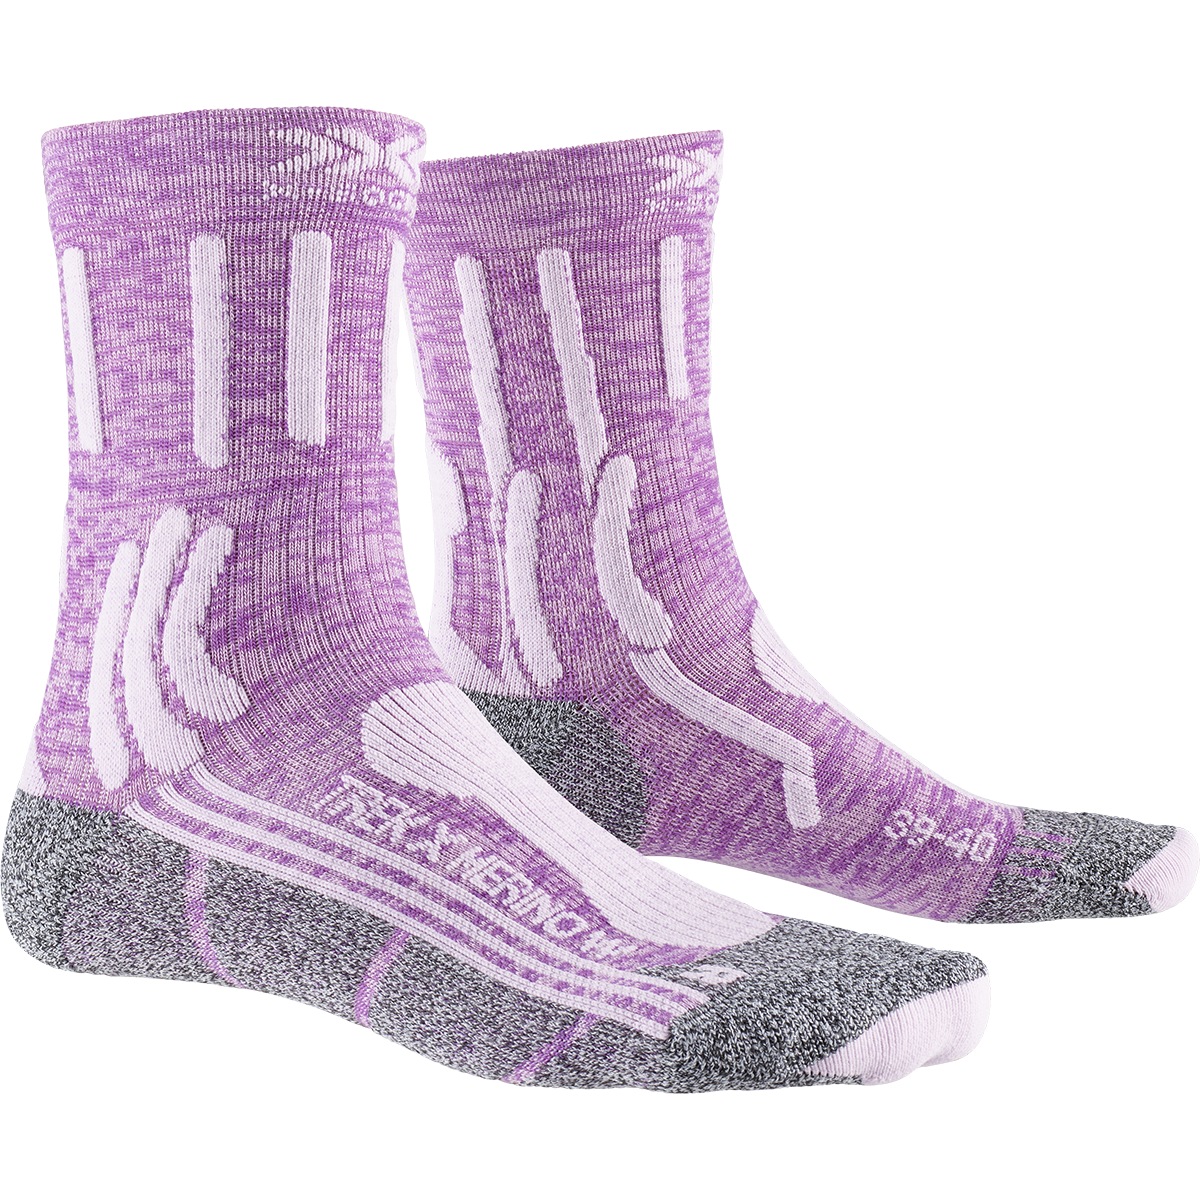 Produktbild von X-Socks Trek X Merino Damensocken - magnolia purple melange/dolomite grey